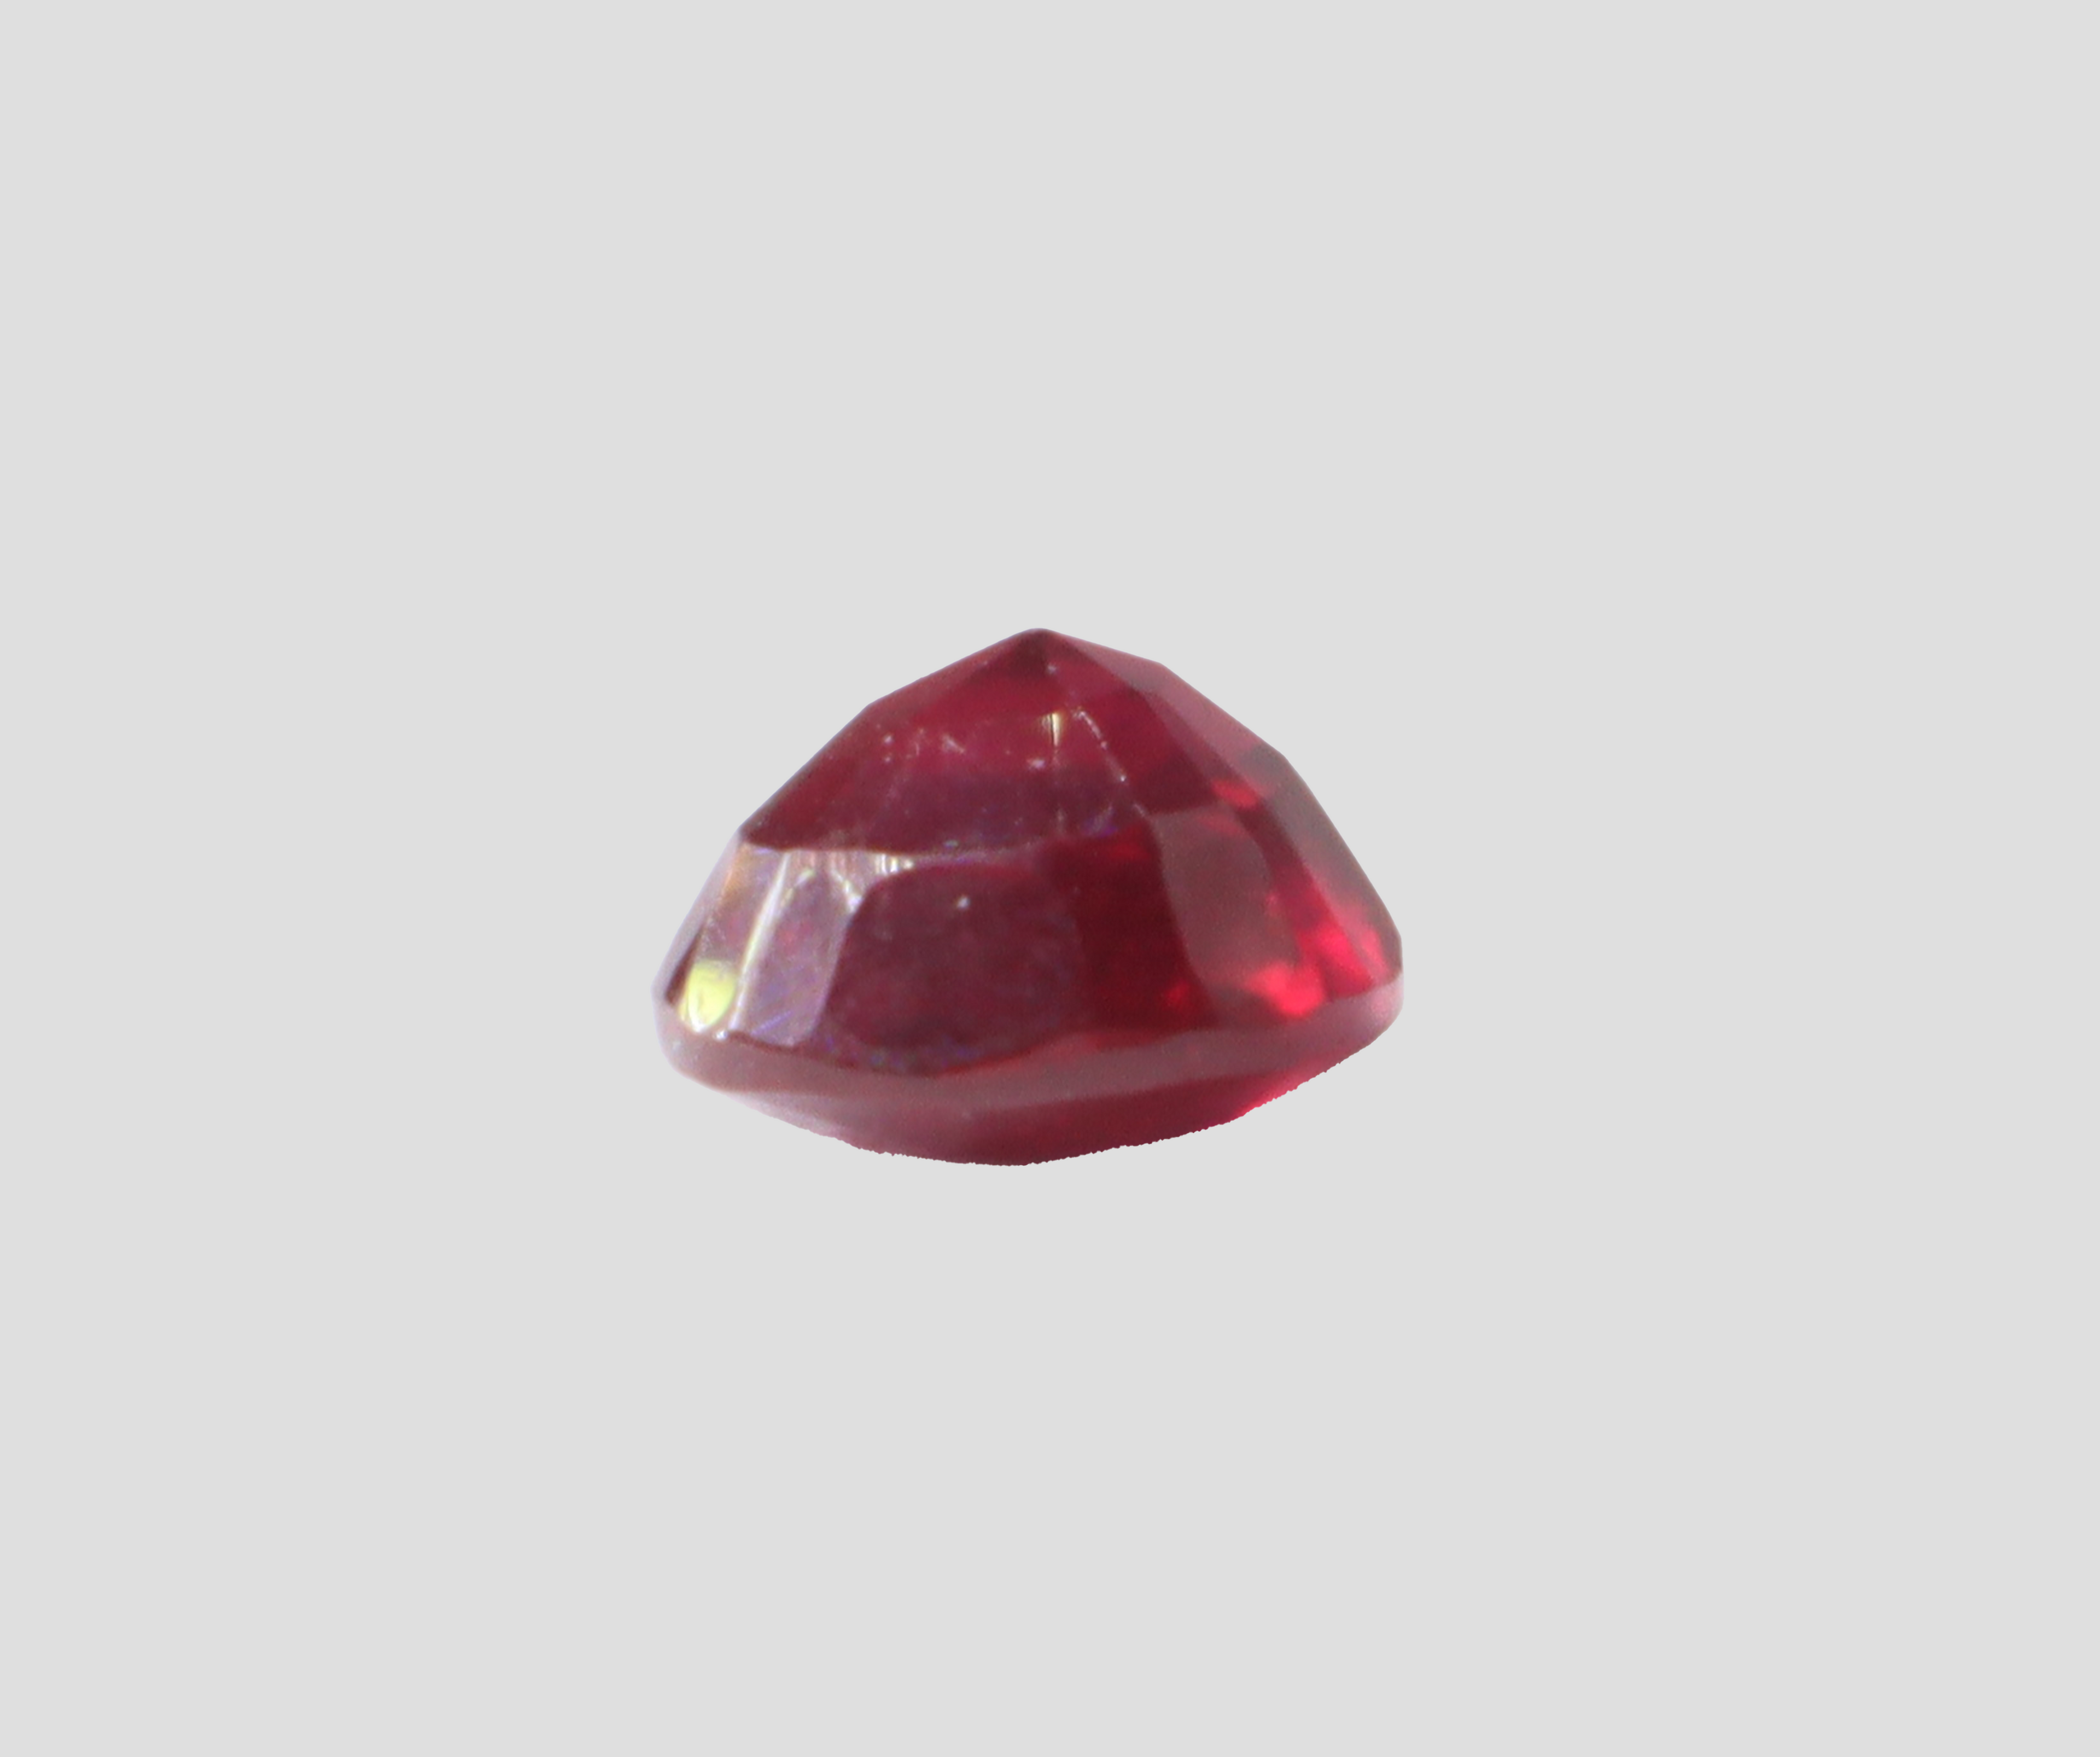 Ruby - 4.92 Carats (Thailand)